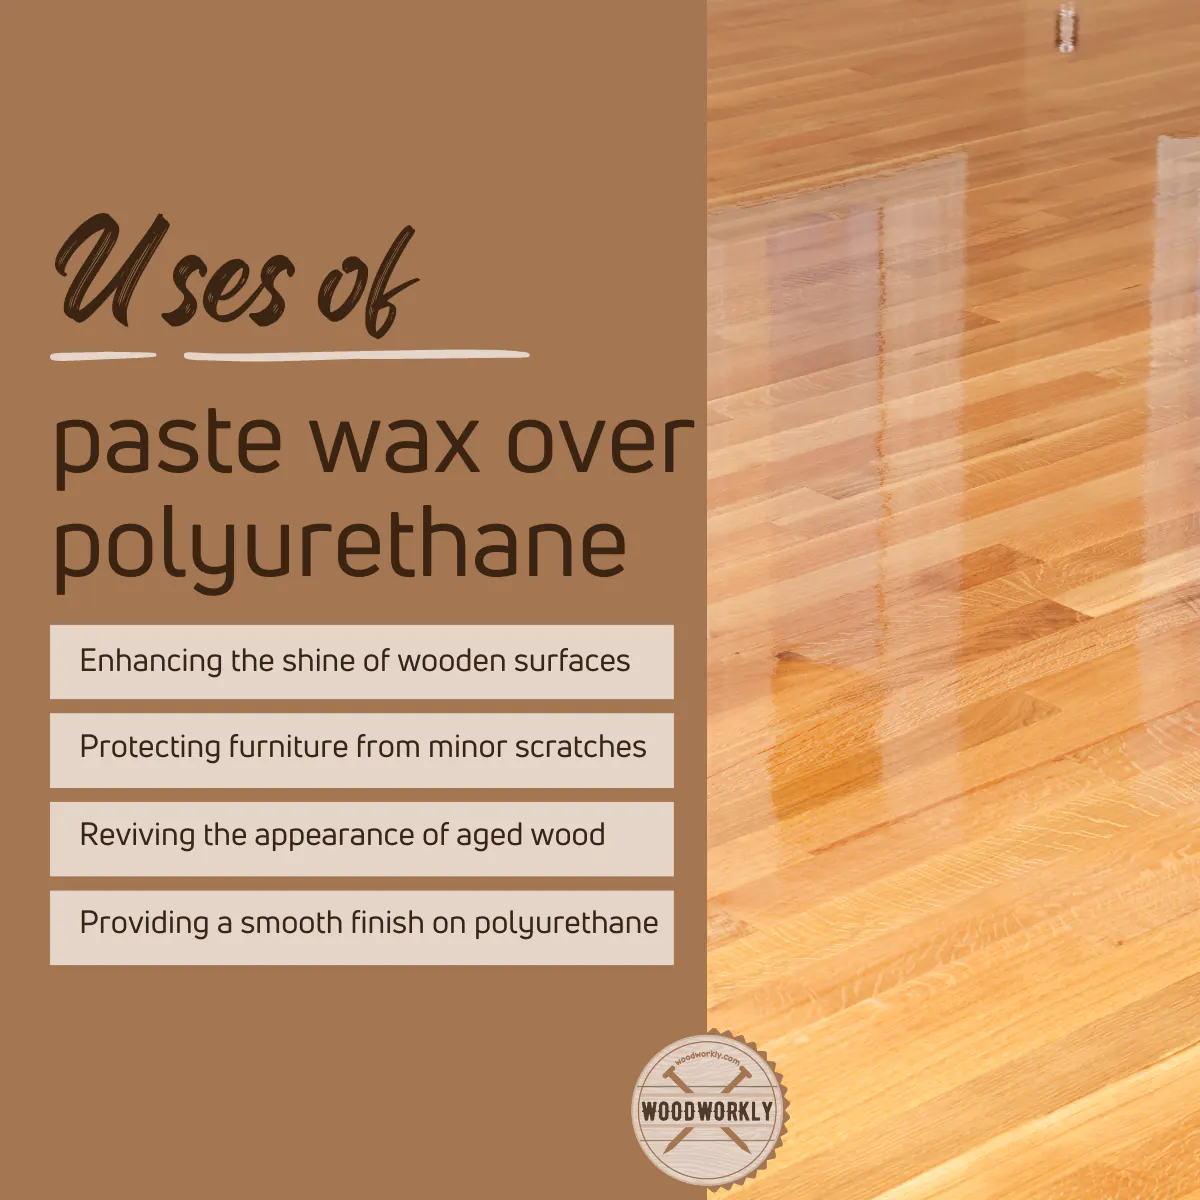 Uses of paste wax over polyurethane